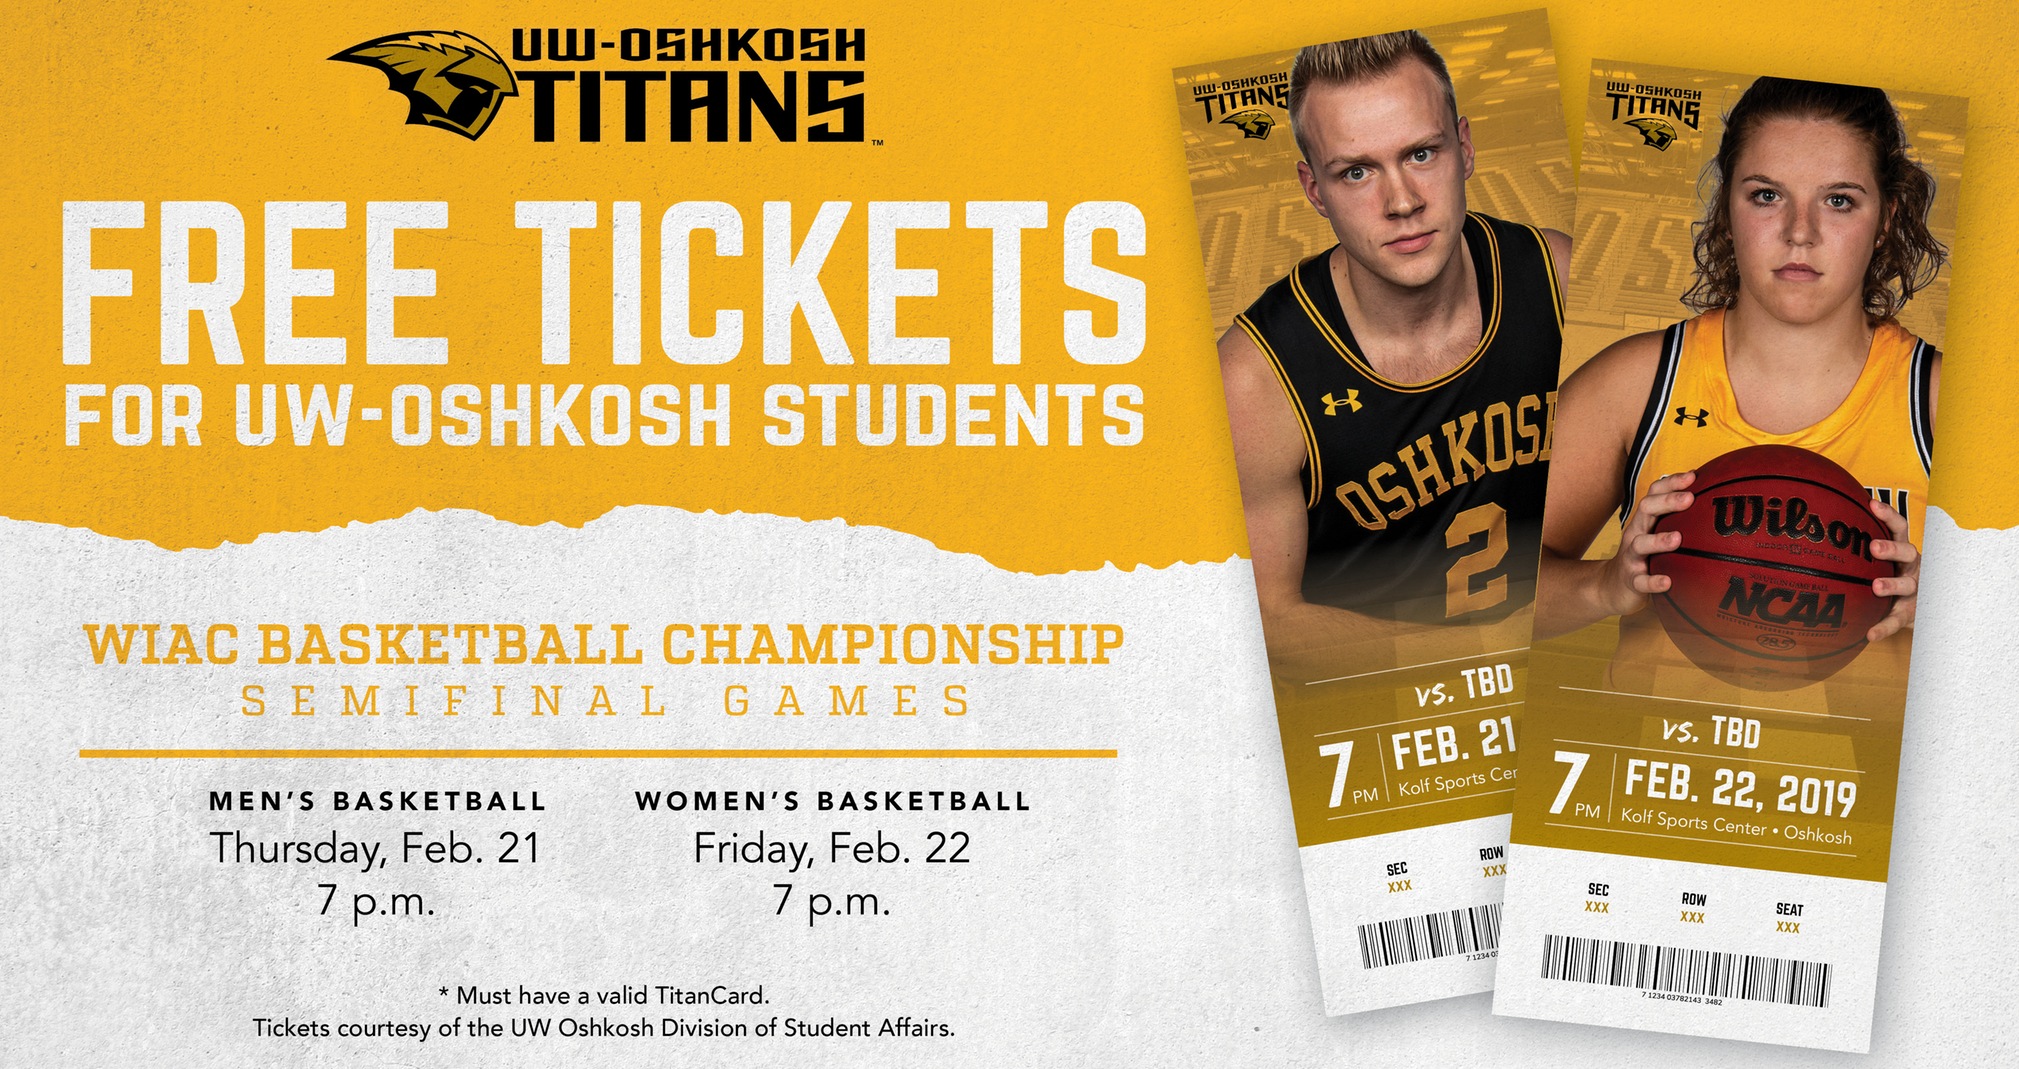 Free WIAC Basketball Championship Tickets Available For UW-Oshkosh Students